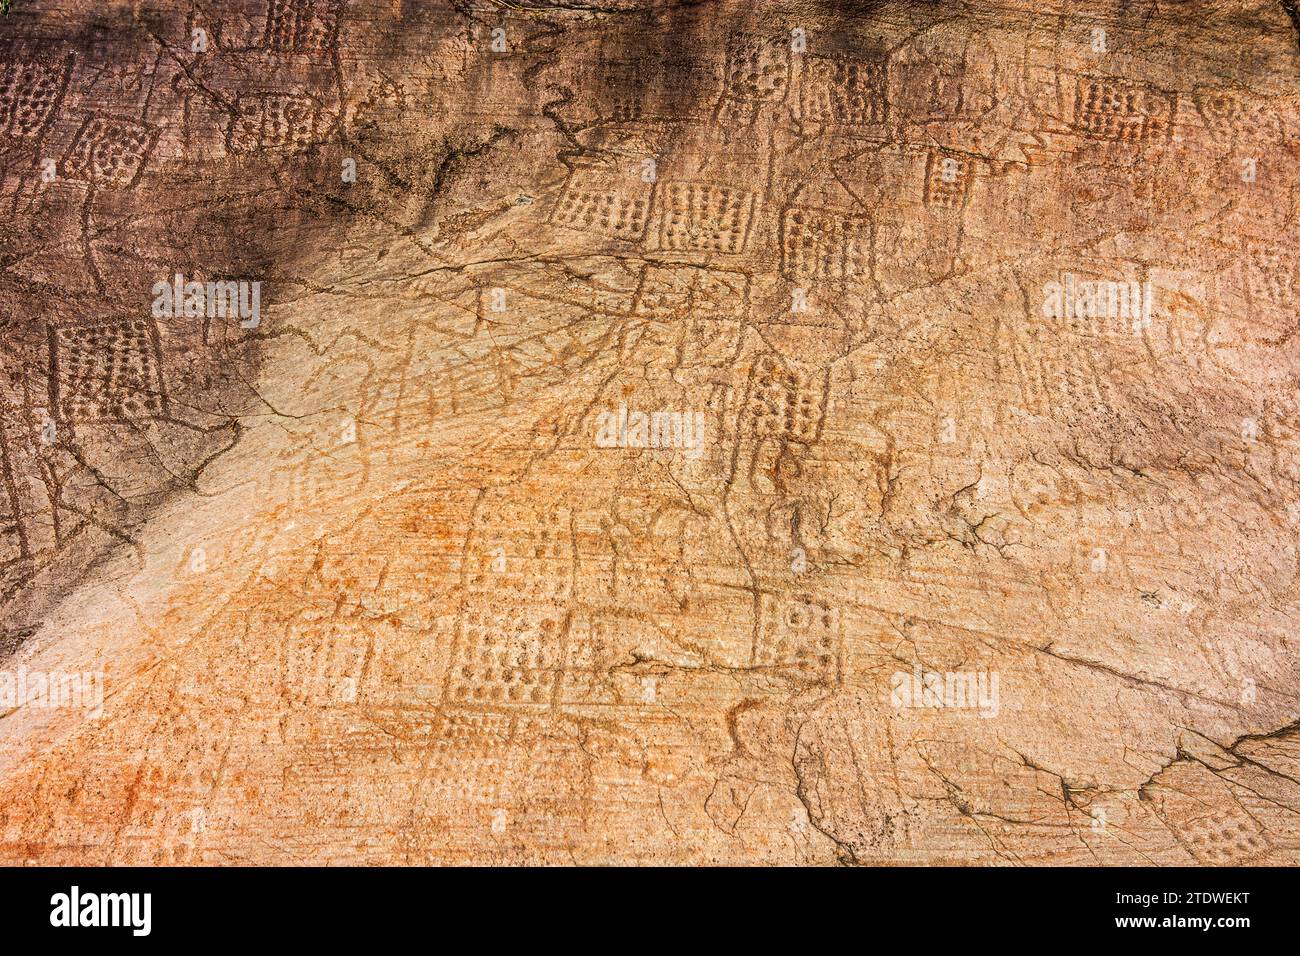 Capo di Ponte: Geometrical composition called 'Bedolina map'. R.1, Municipal Archaeological Park of Seradina-Bedolina, rock art sites, rock drawings i Stock Photo